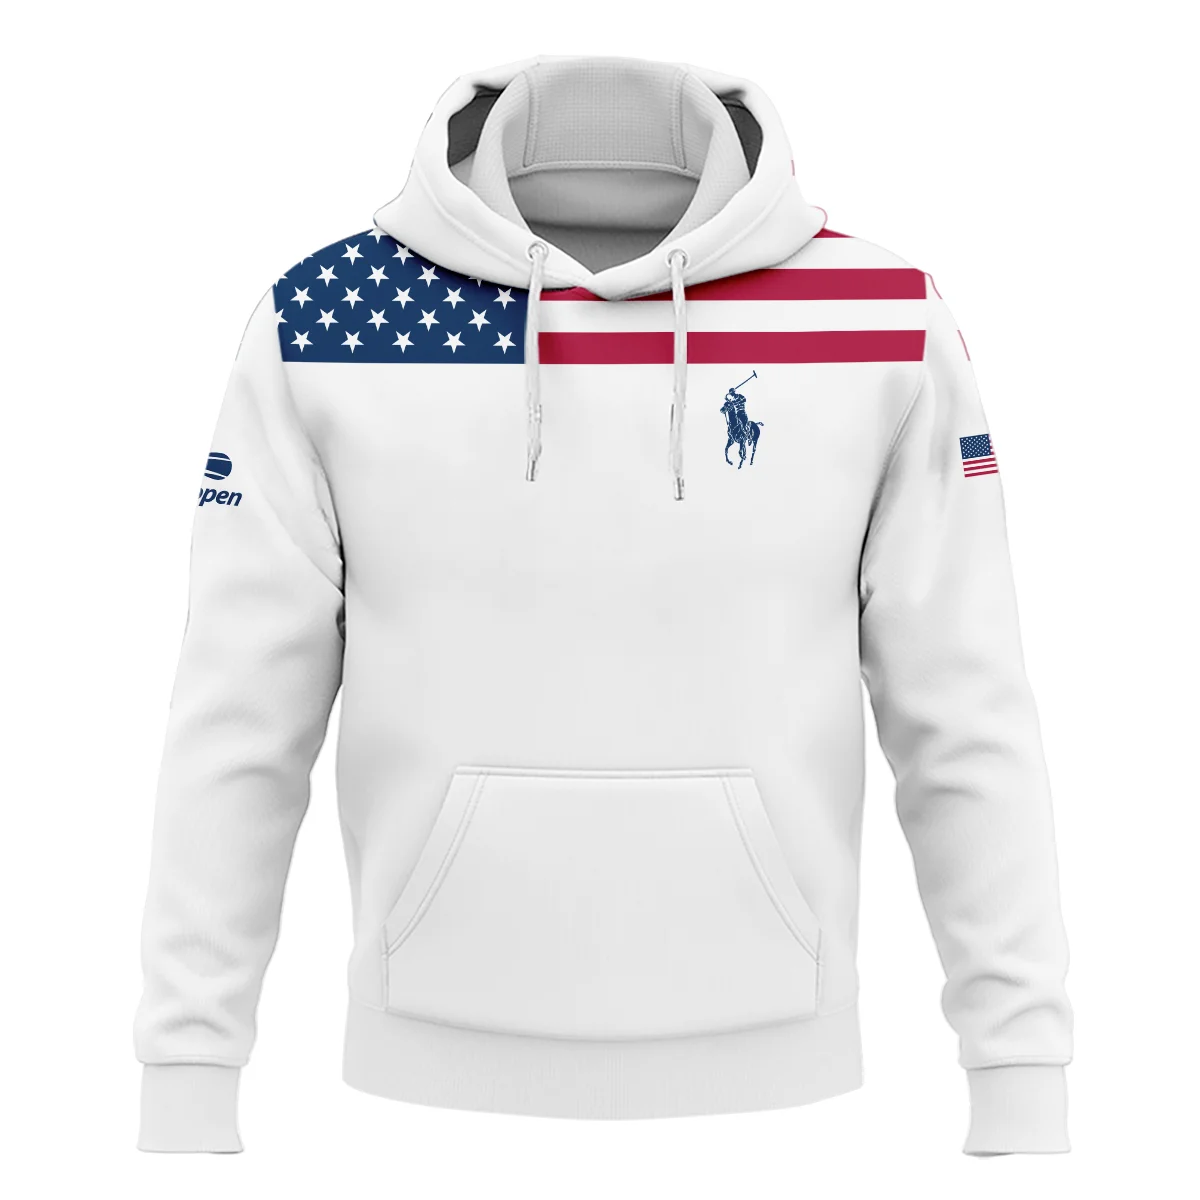 US Open Tennis Champions Ralph Lauren USA Flag White Vneck Polo Shirt Style Classic Polo Shirt For Men